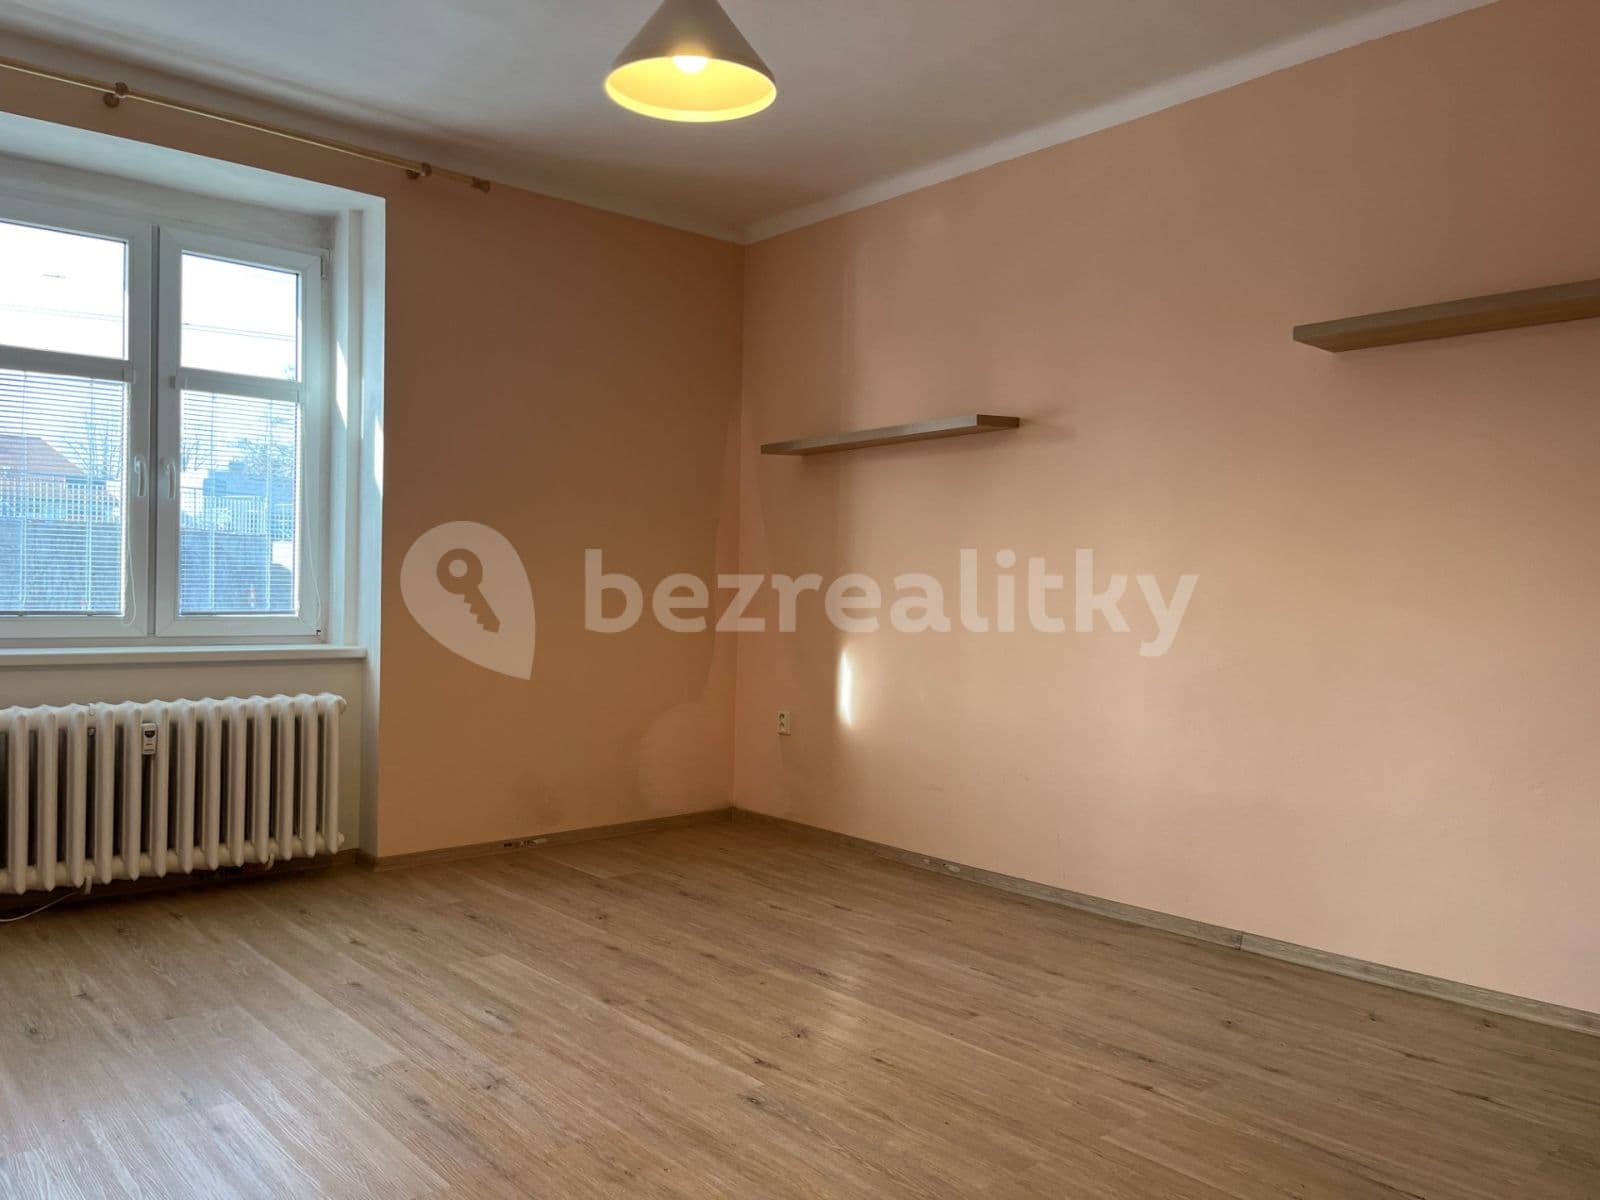 1 bedroom flat to rent, 39 m², Masarykova třída, Teplice, Ústecký Region